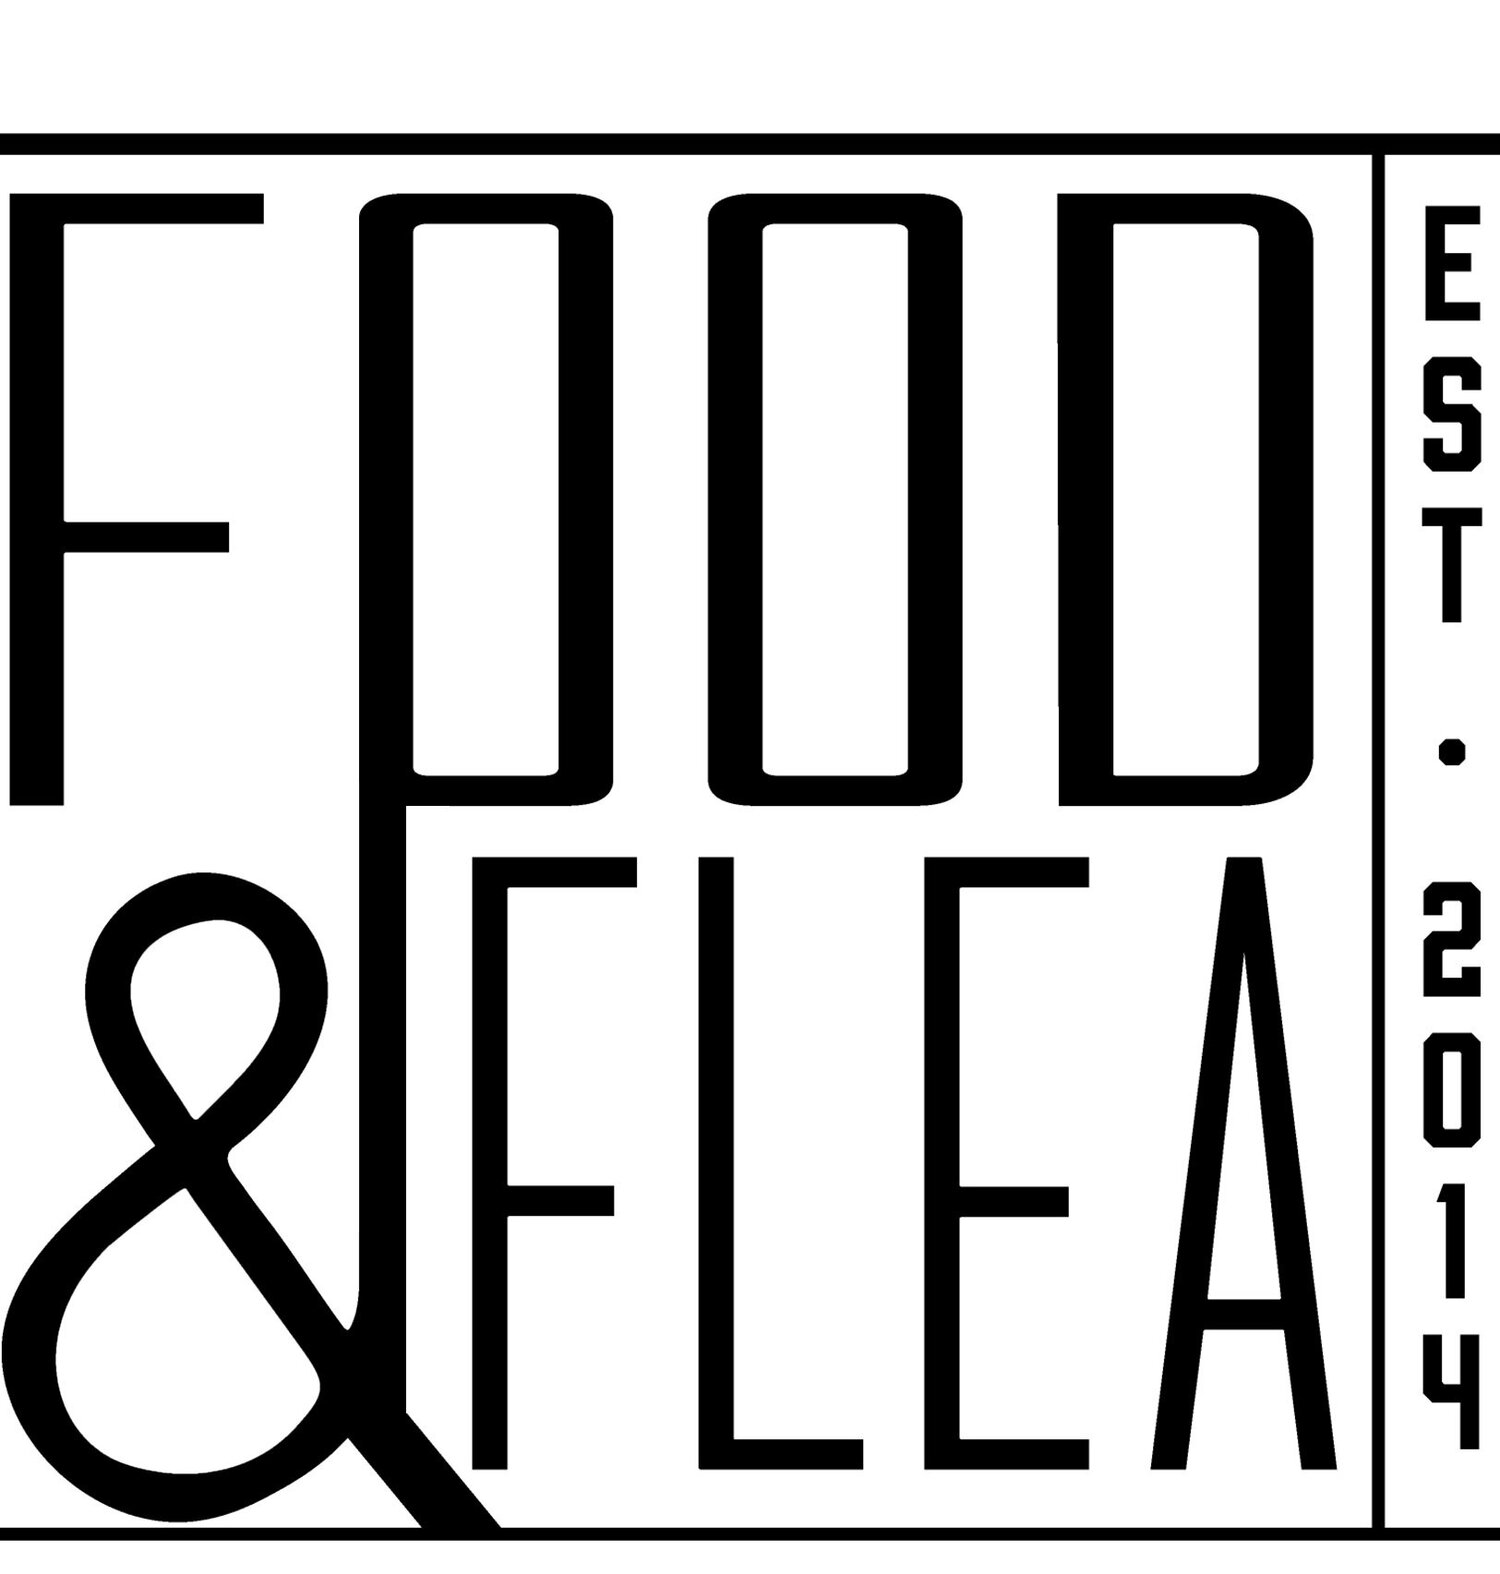 2019 Cary Summer Food and Flea Market